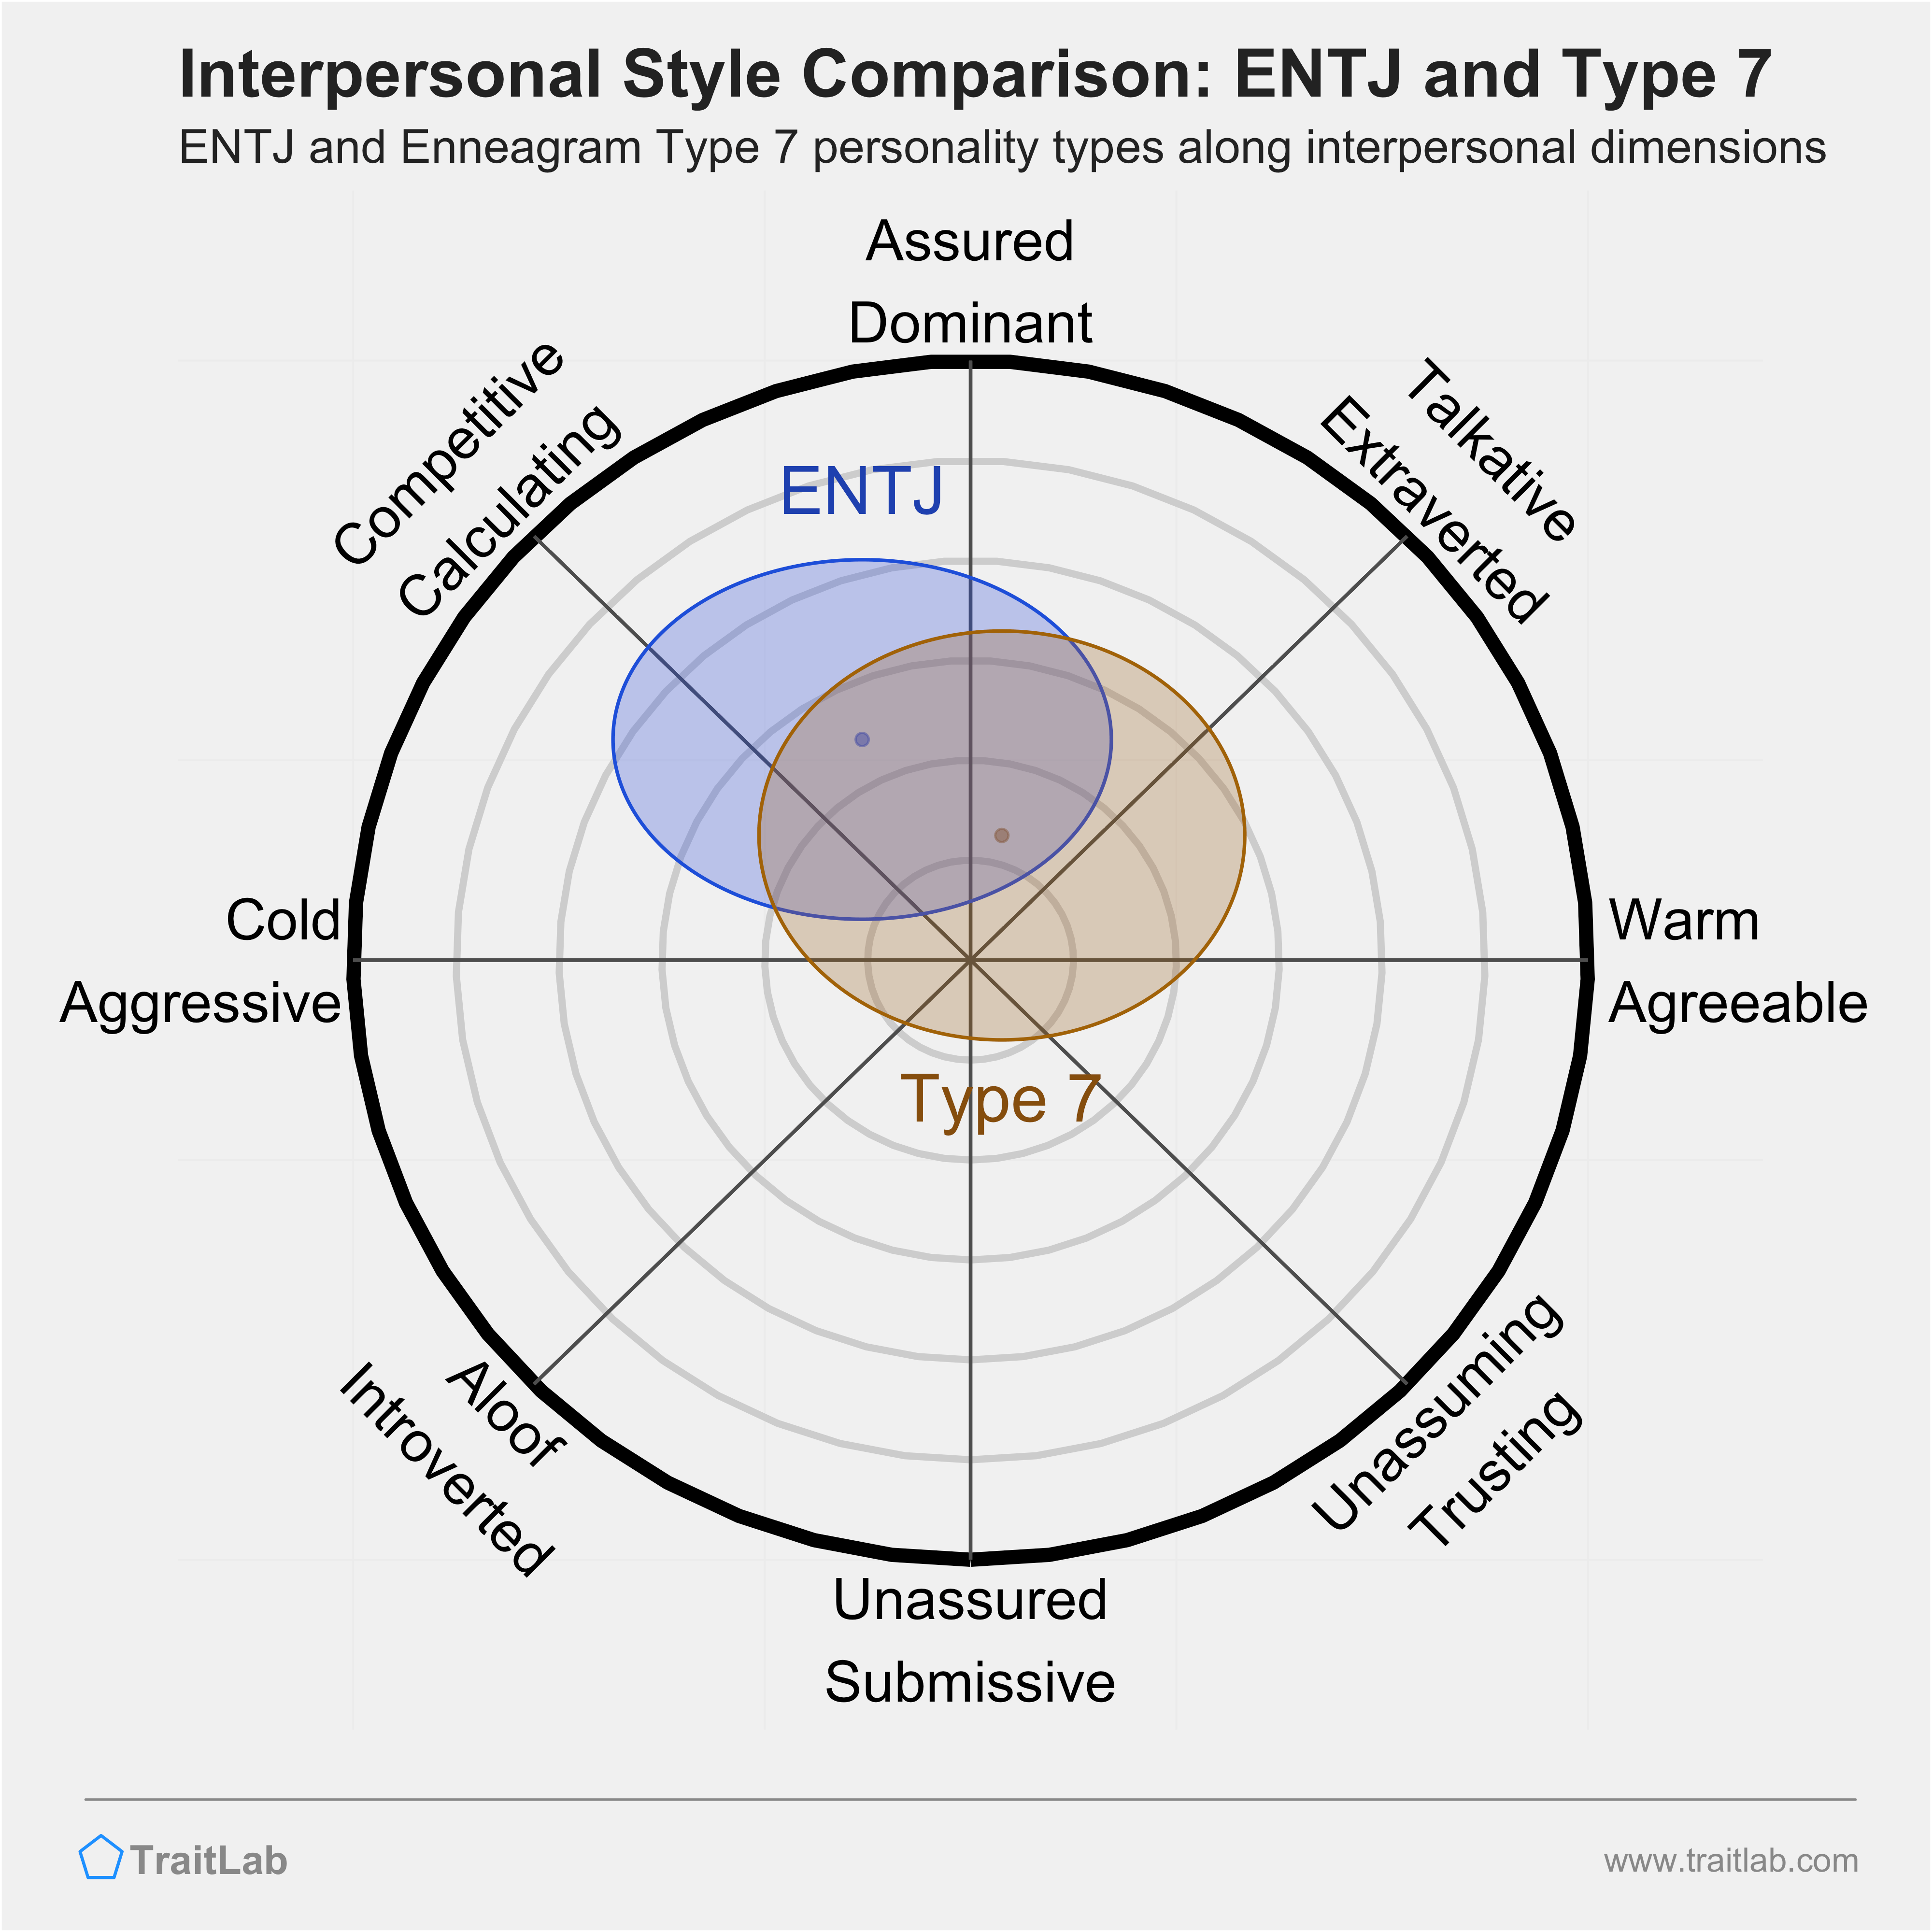 Enneagram ENTJ and Type 7 comparison across interpersonal dimensions